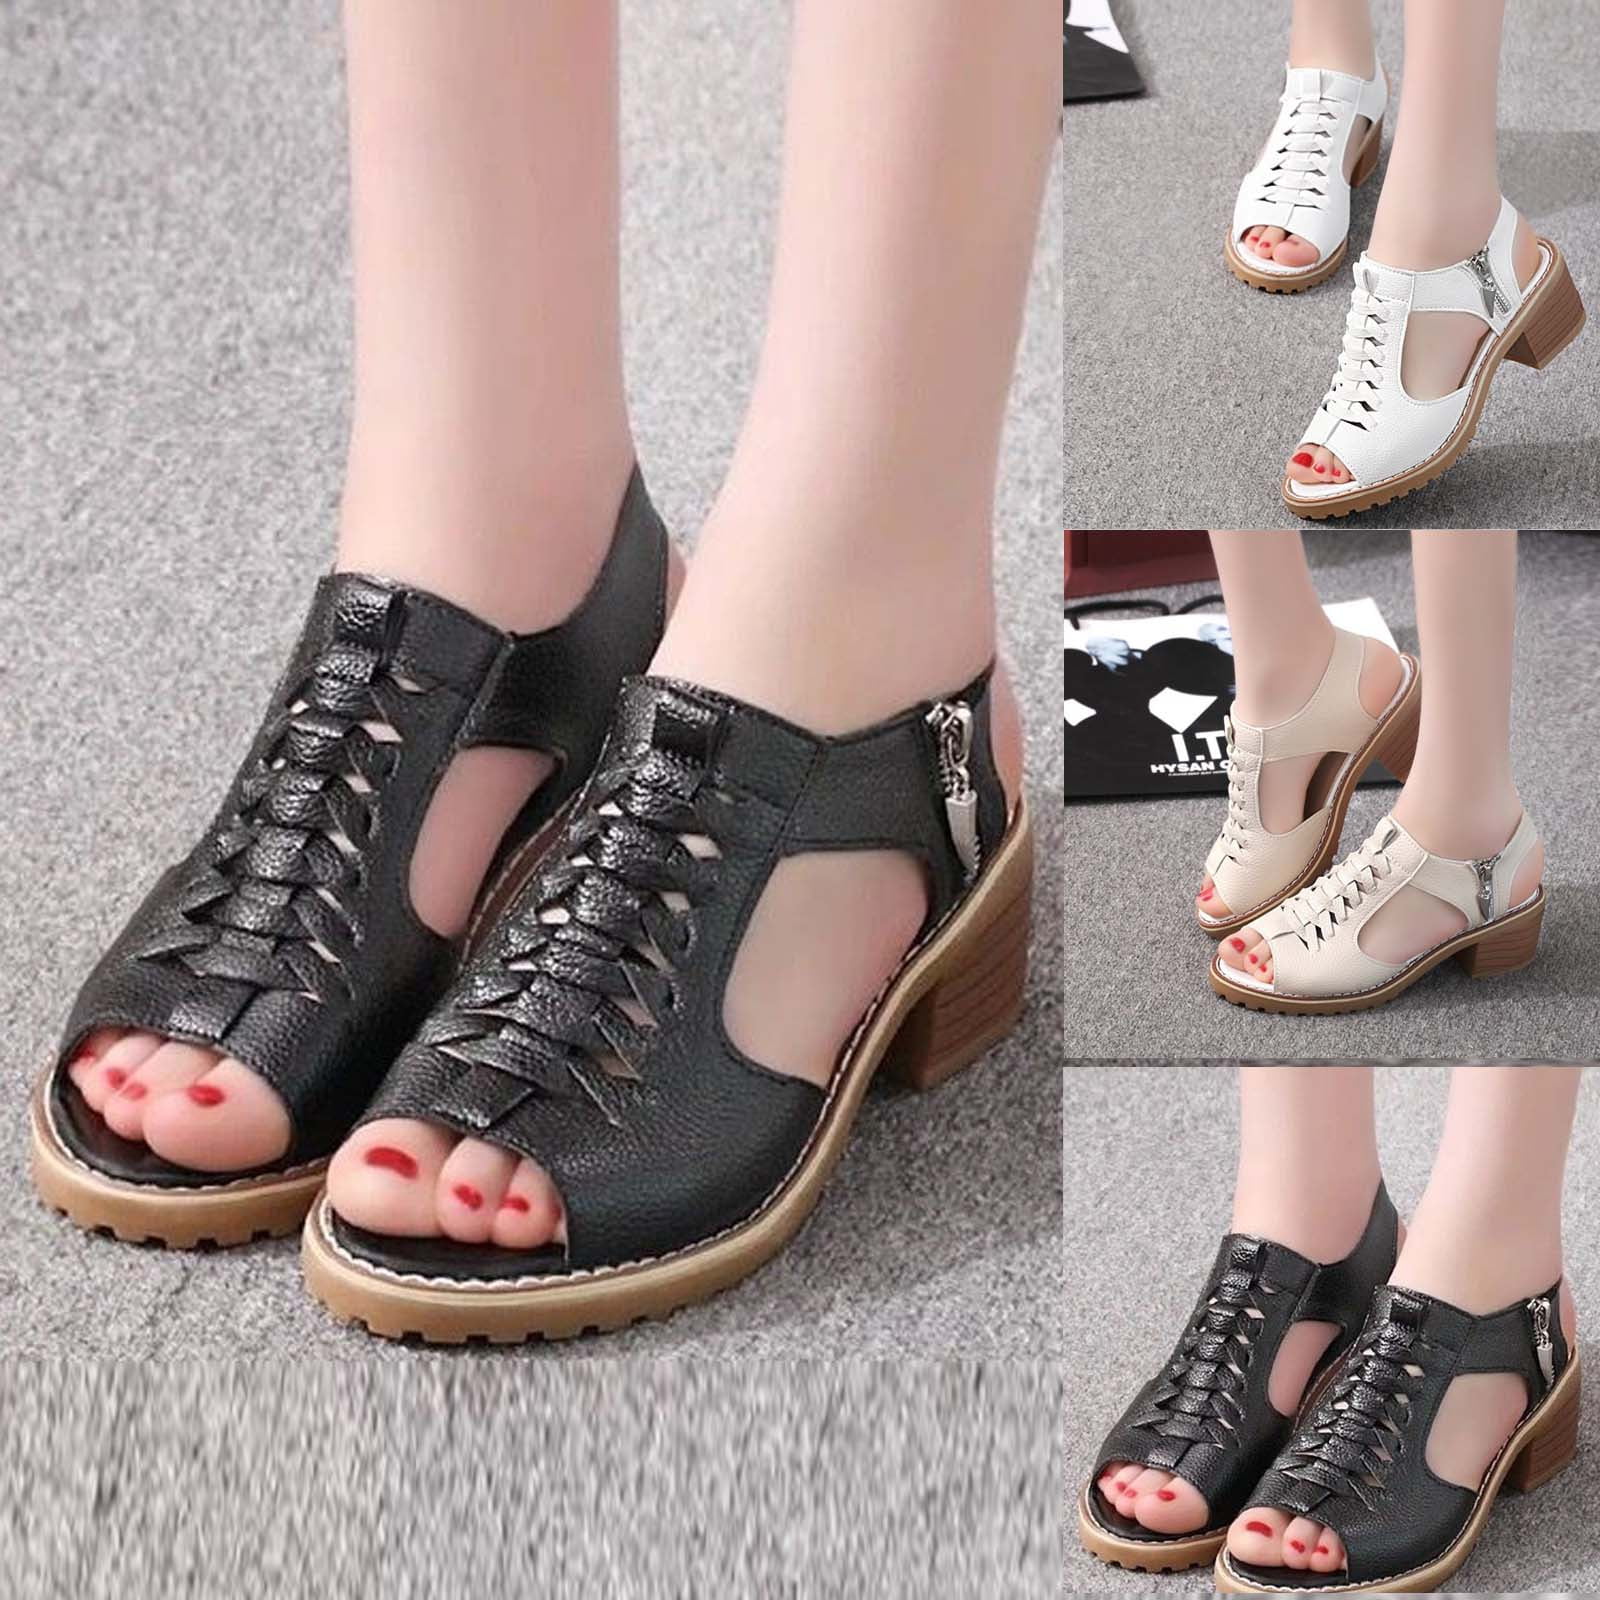 Women's Sandals Summer Casual Dress,Women's Sandals Vintage Wedge Peep Toe High Heel Platform Walking Shoes Non-Slip Sandals 